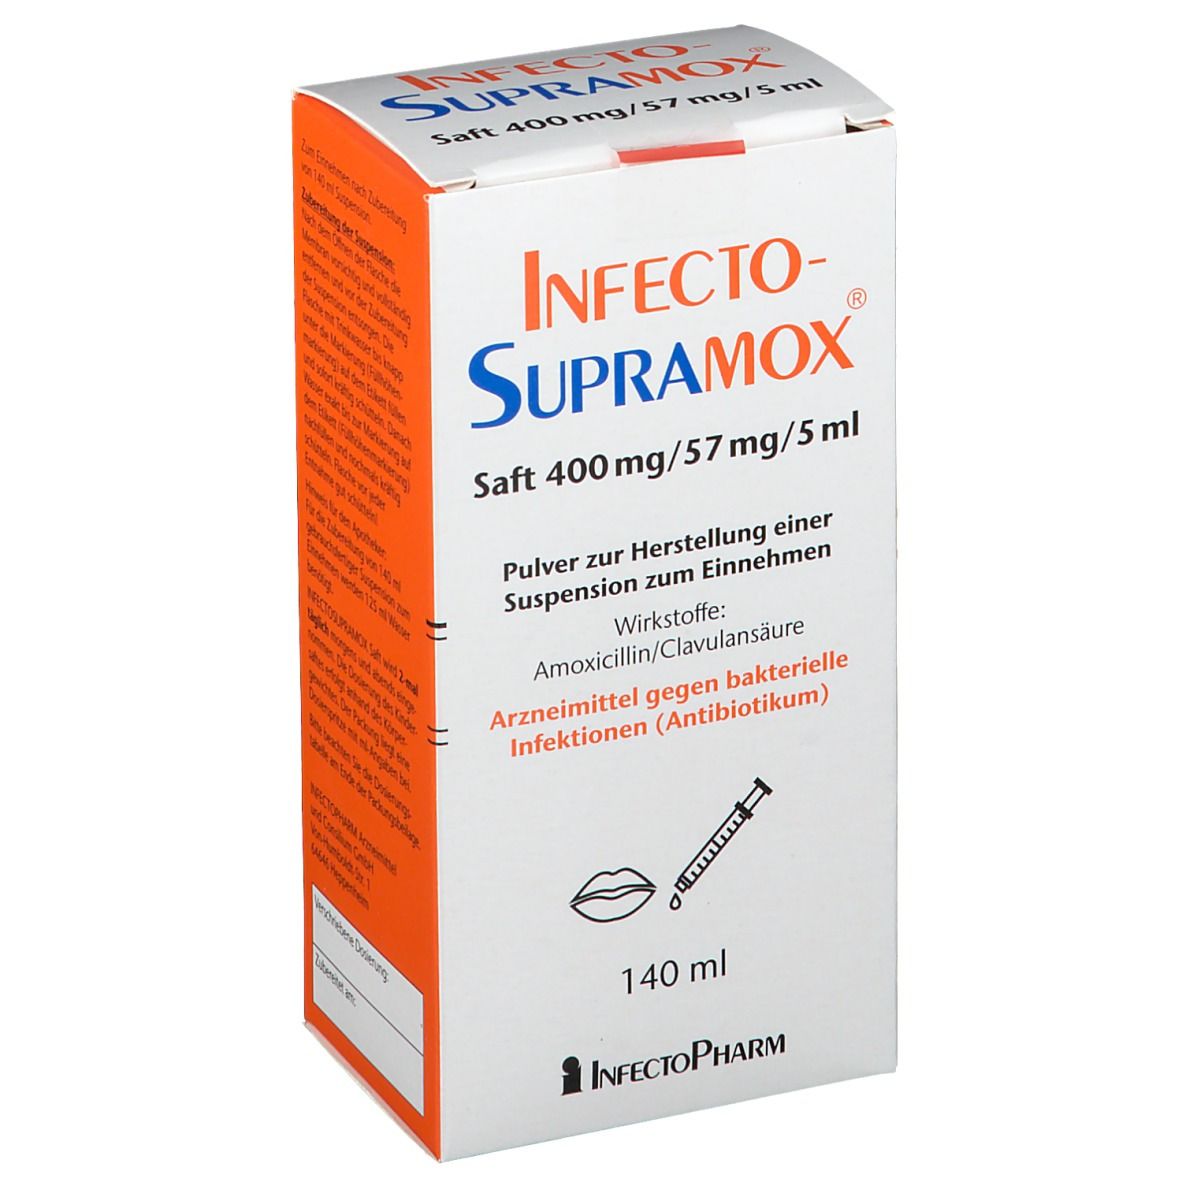 InfectoSupramox® 400 mg/57 mg/5 ml